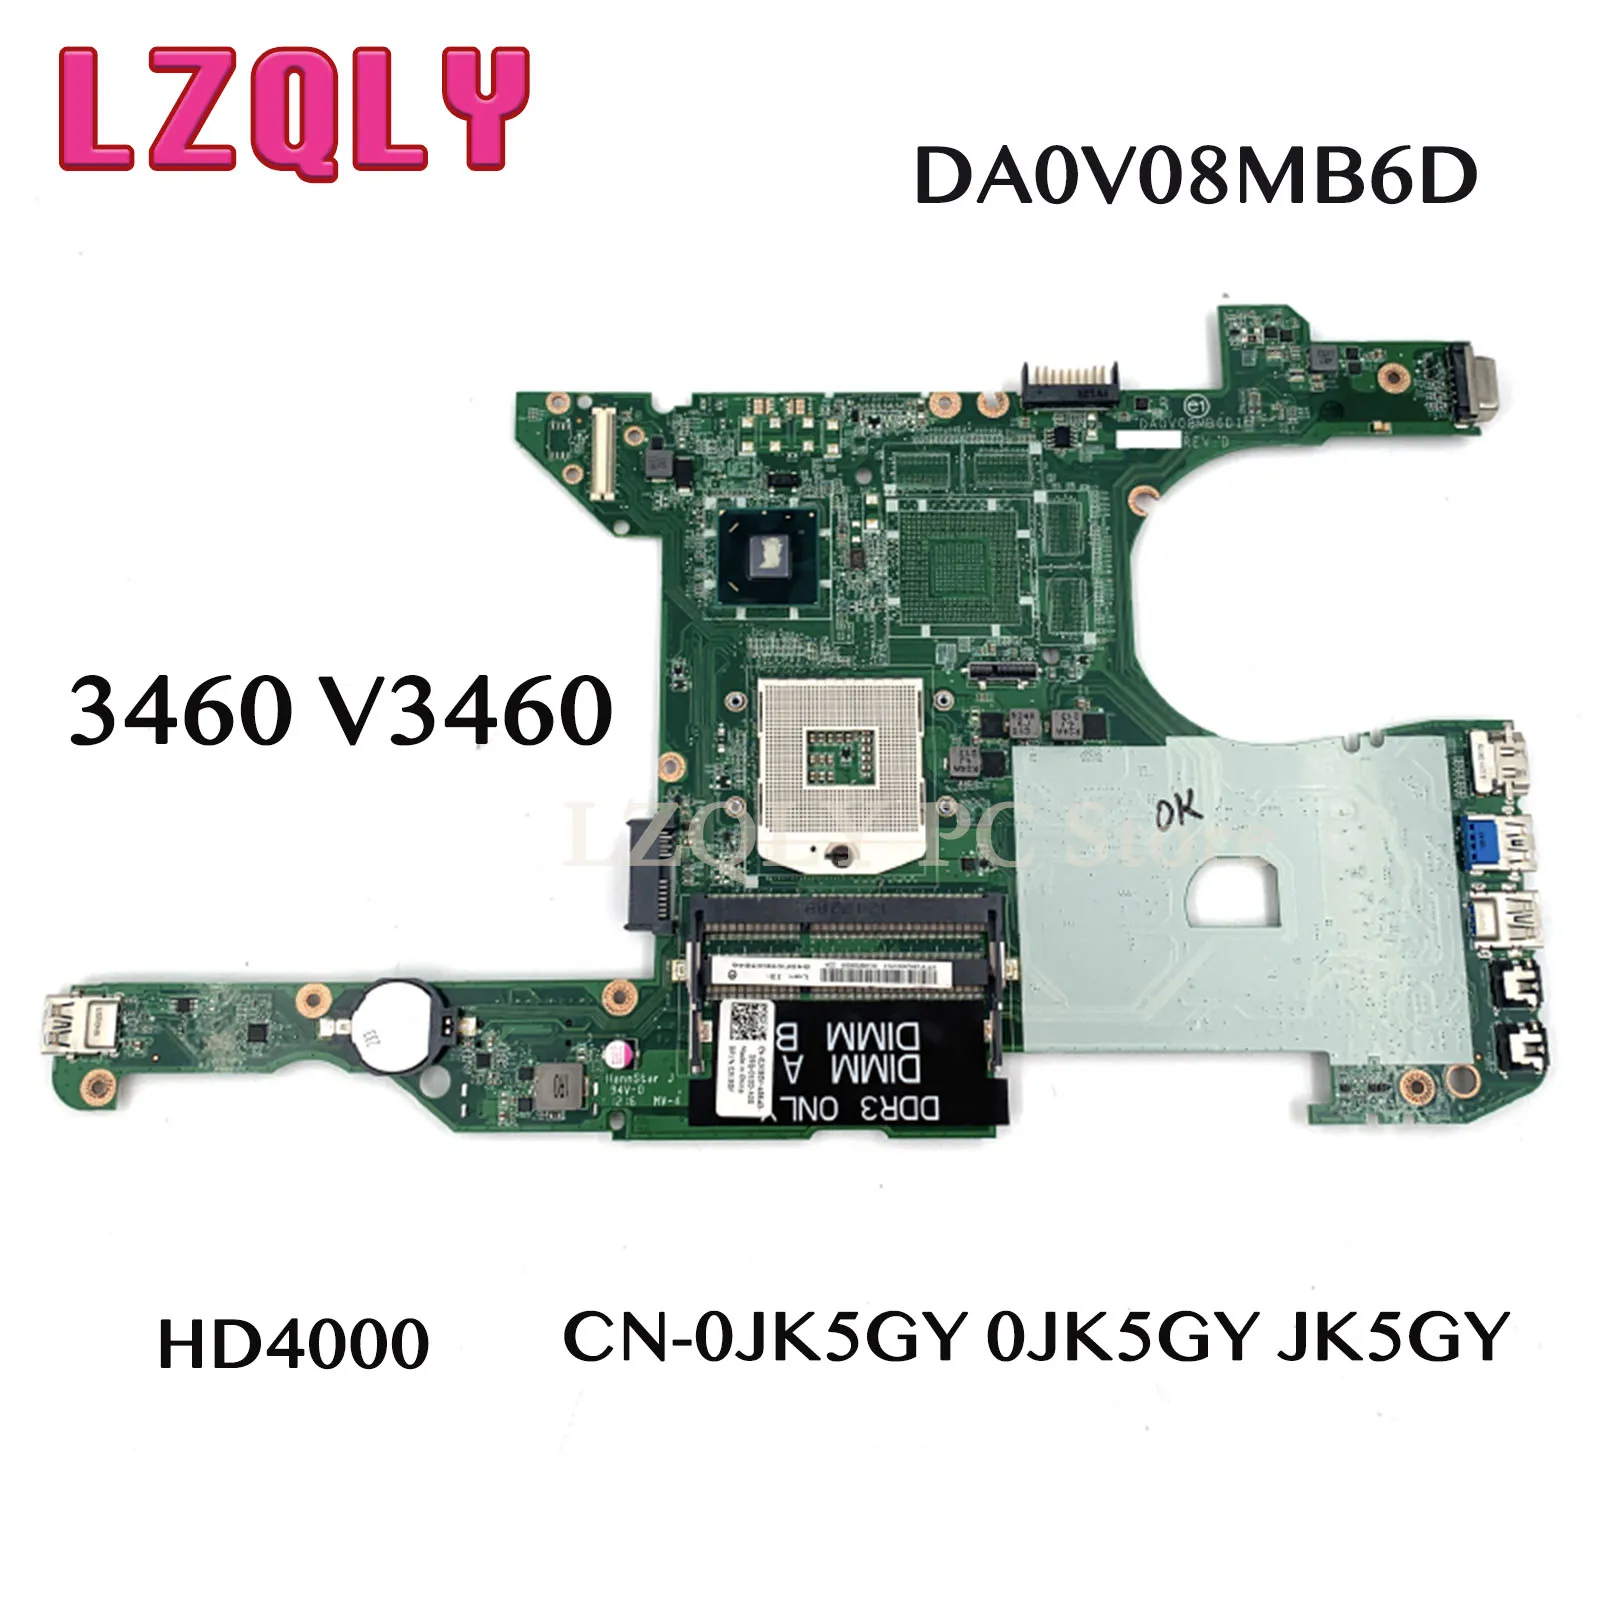 LZQLY CN-0JK5GY 0JK5GY JK5GY DA0V08MB6D1 Laptop Motherboard For Dell Vostro 3460 V3460 Main Board HD4000 DDR3 Full Test